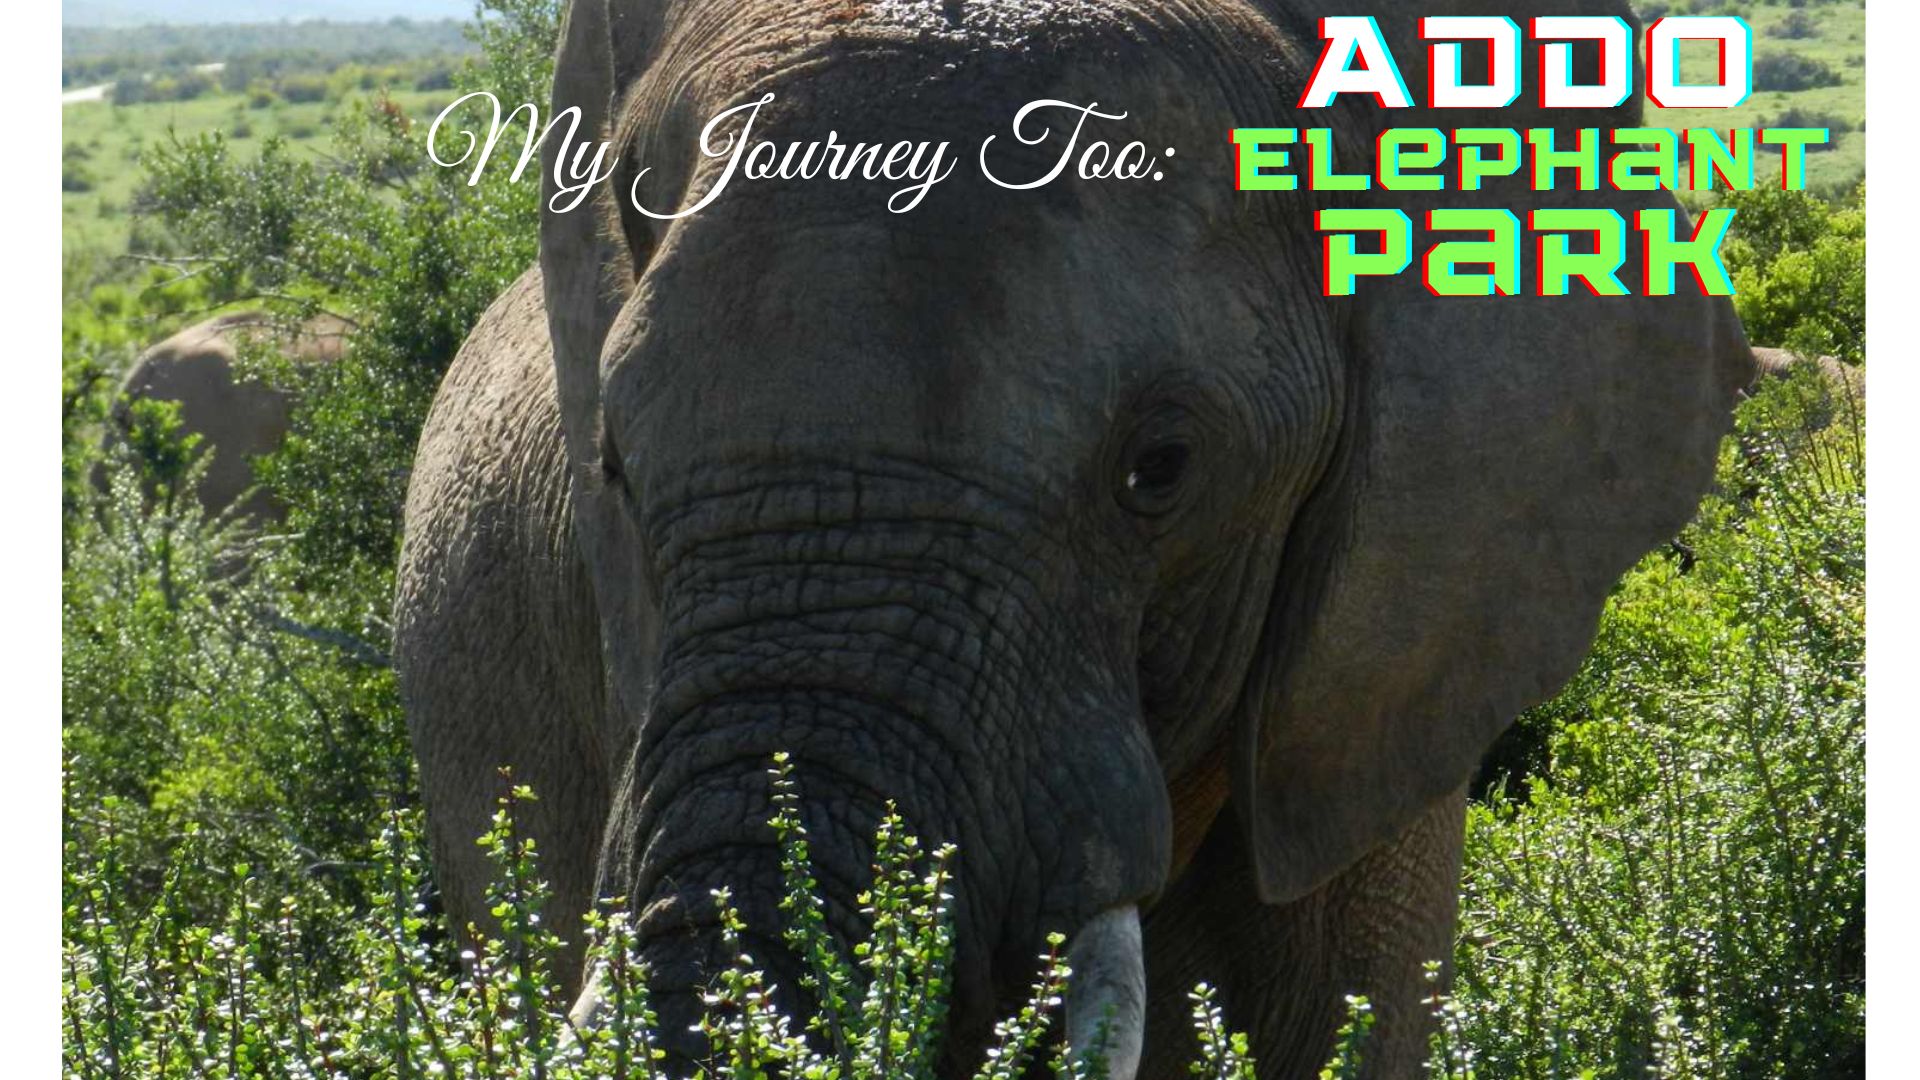 ADDO Elephant Park